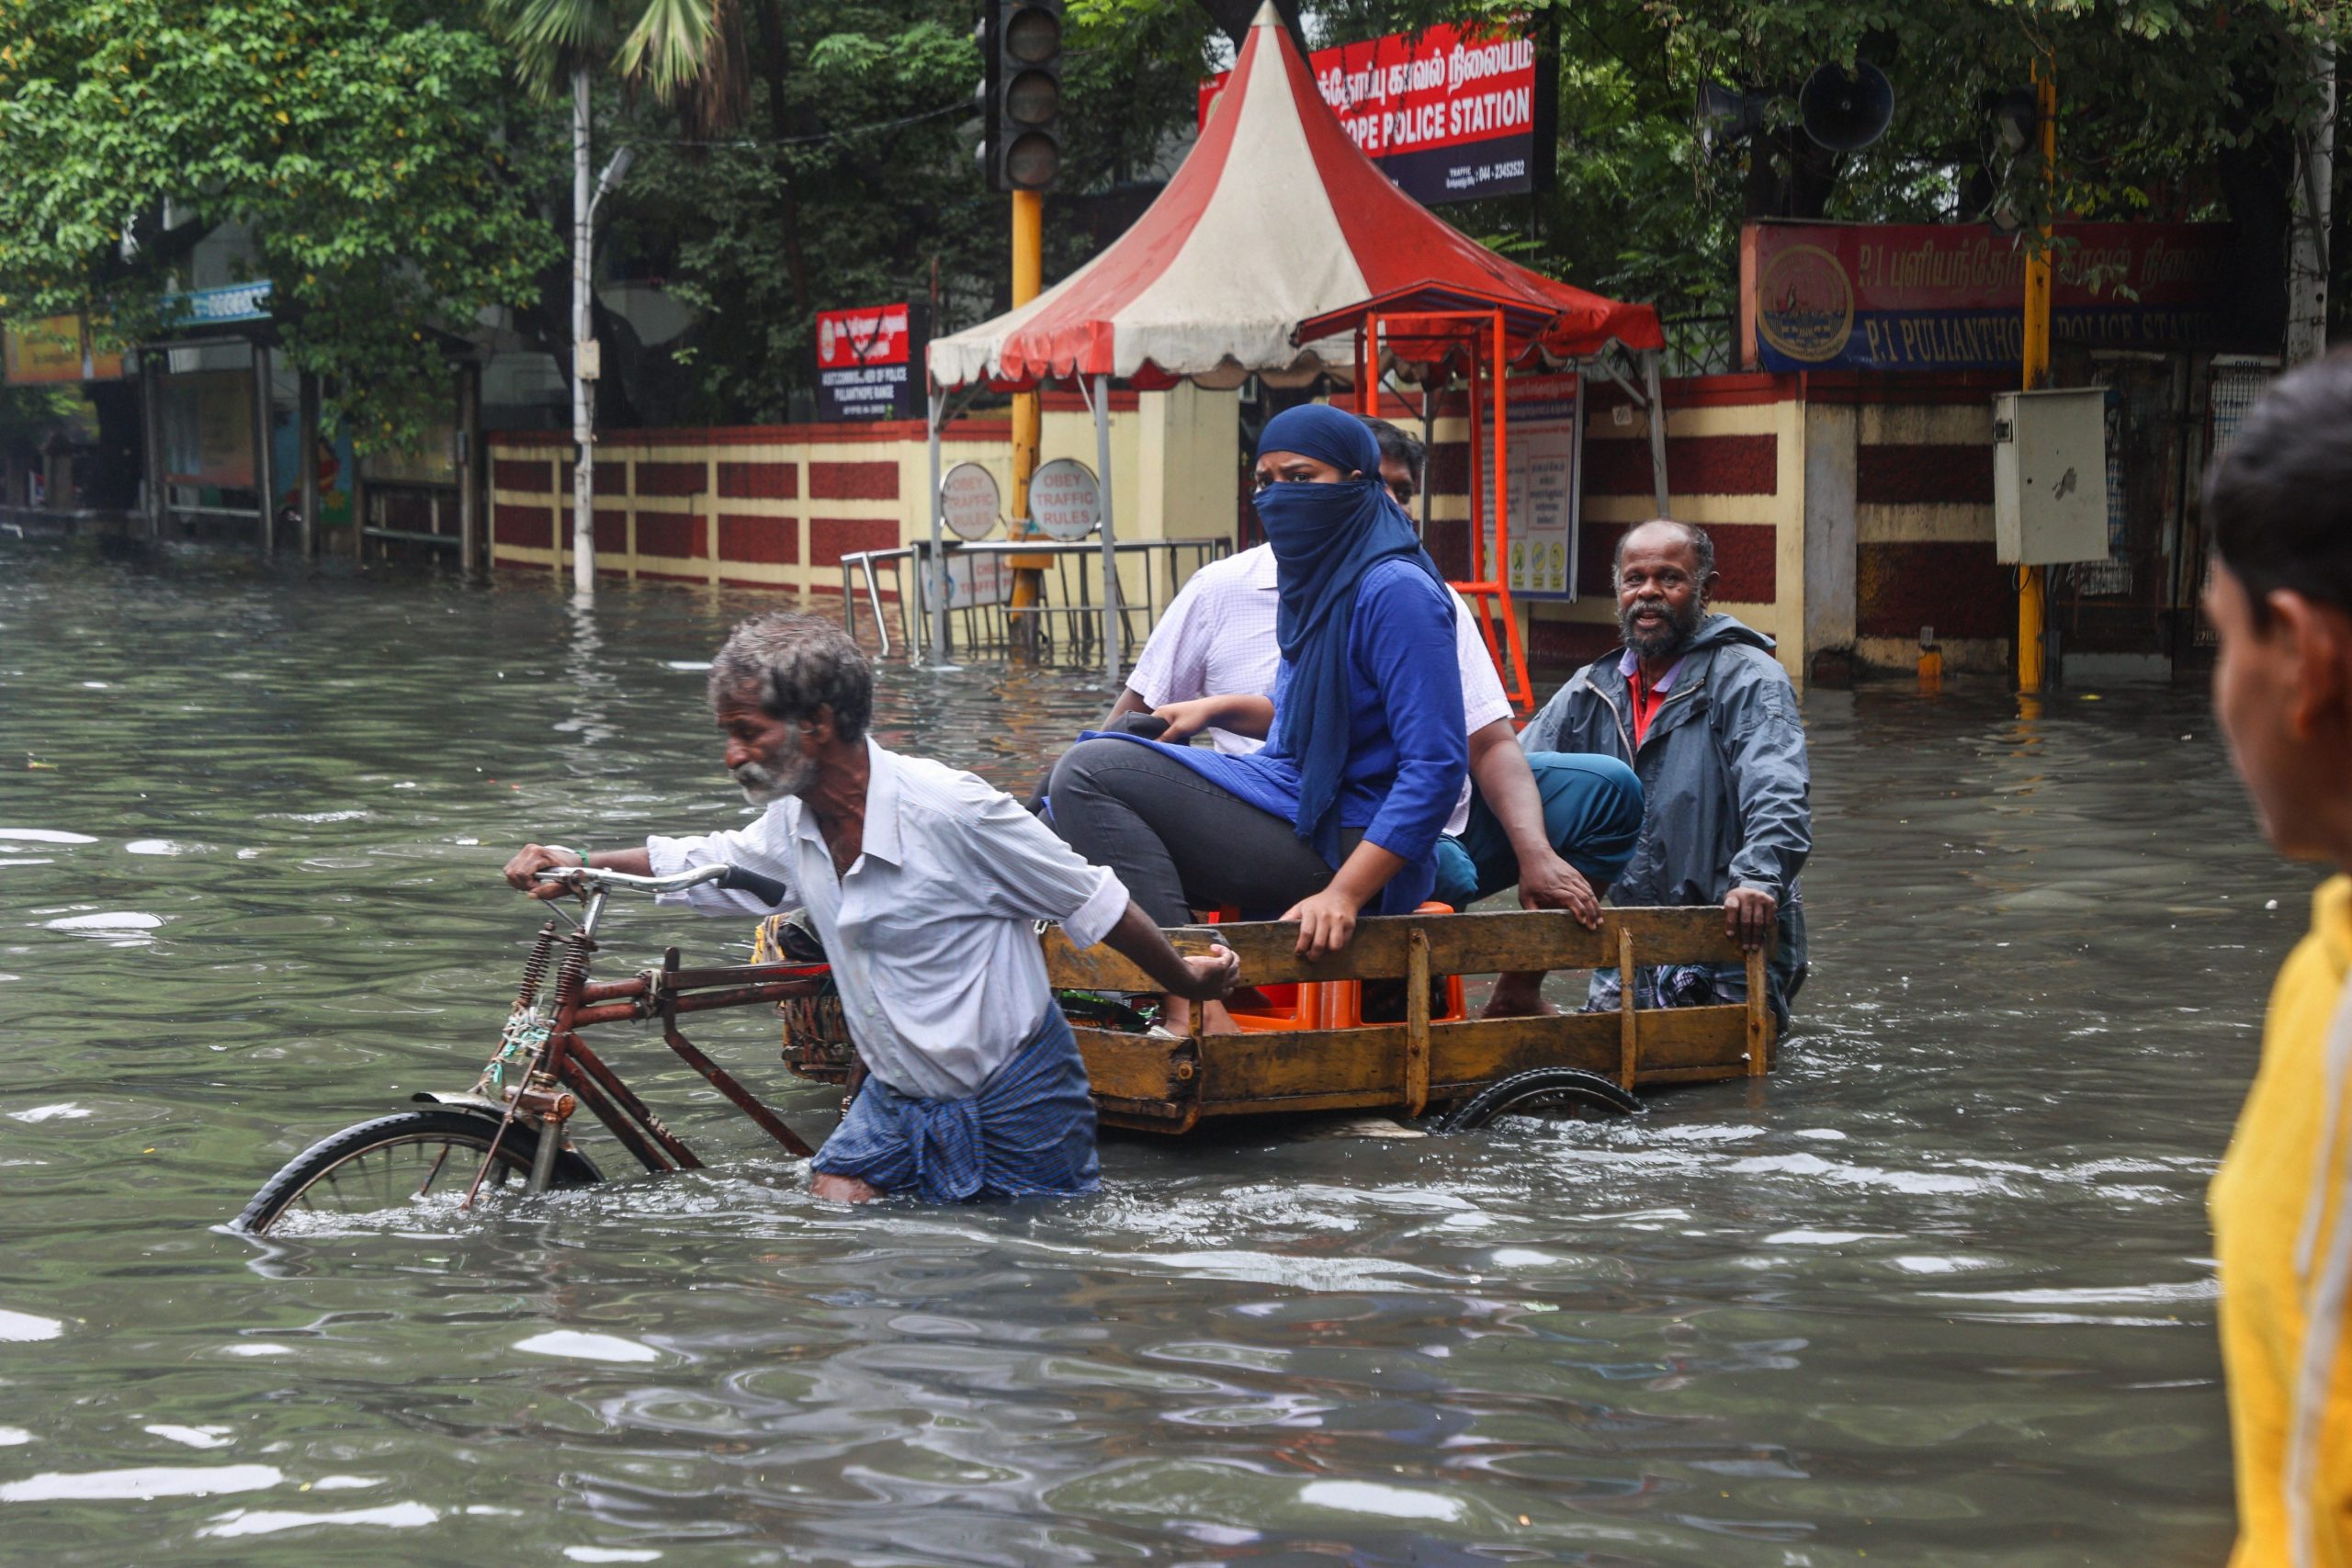 Funny-side up: Chennai rains trigger flood of memes on social media